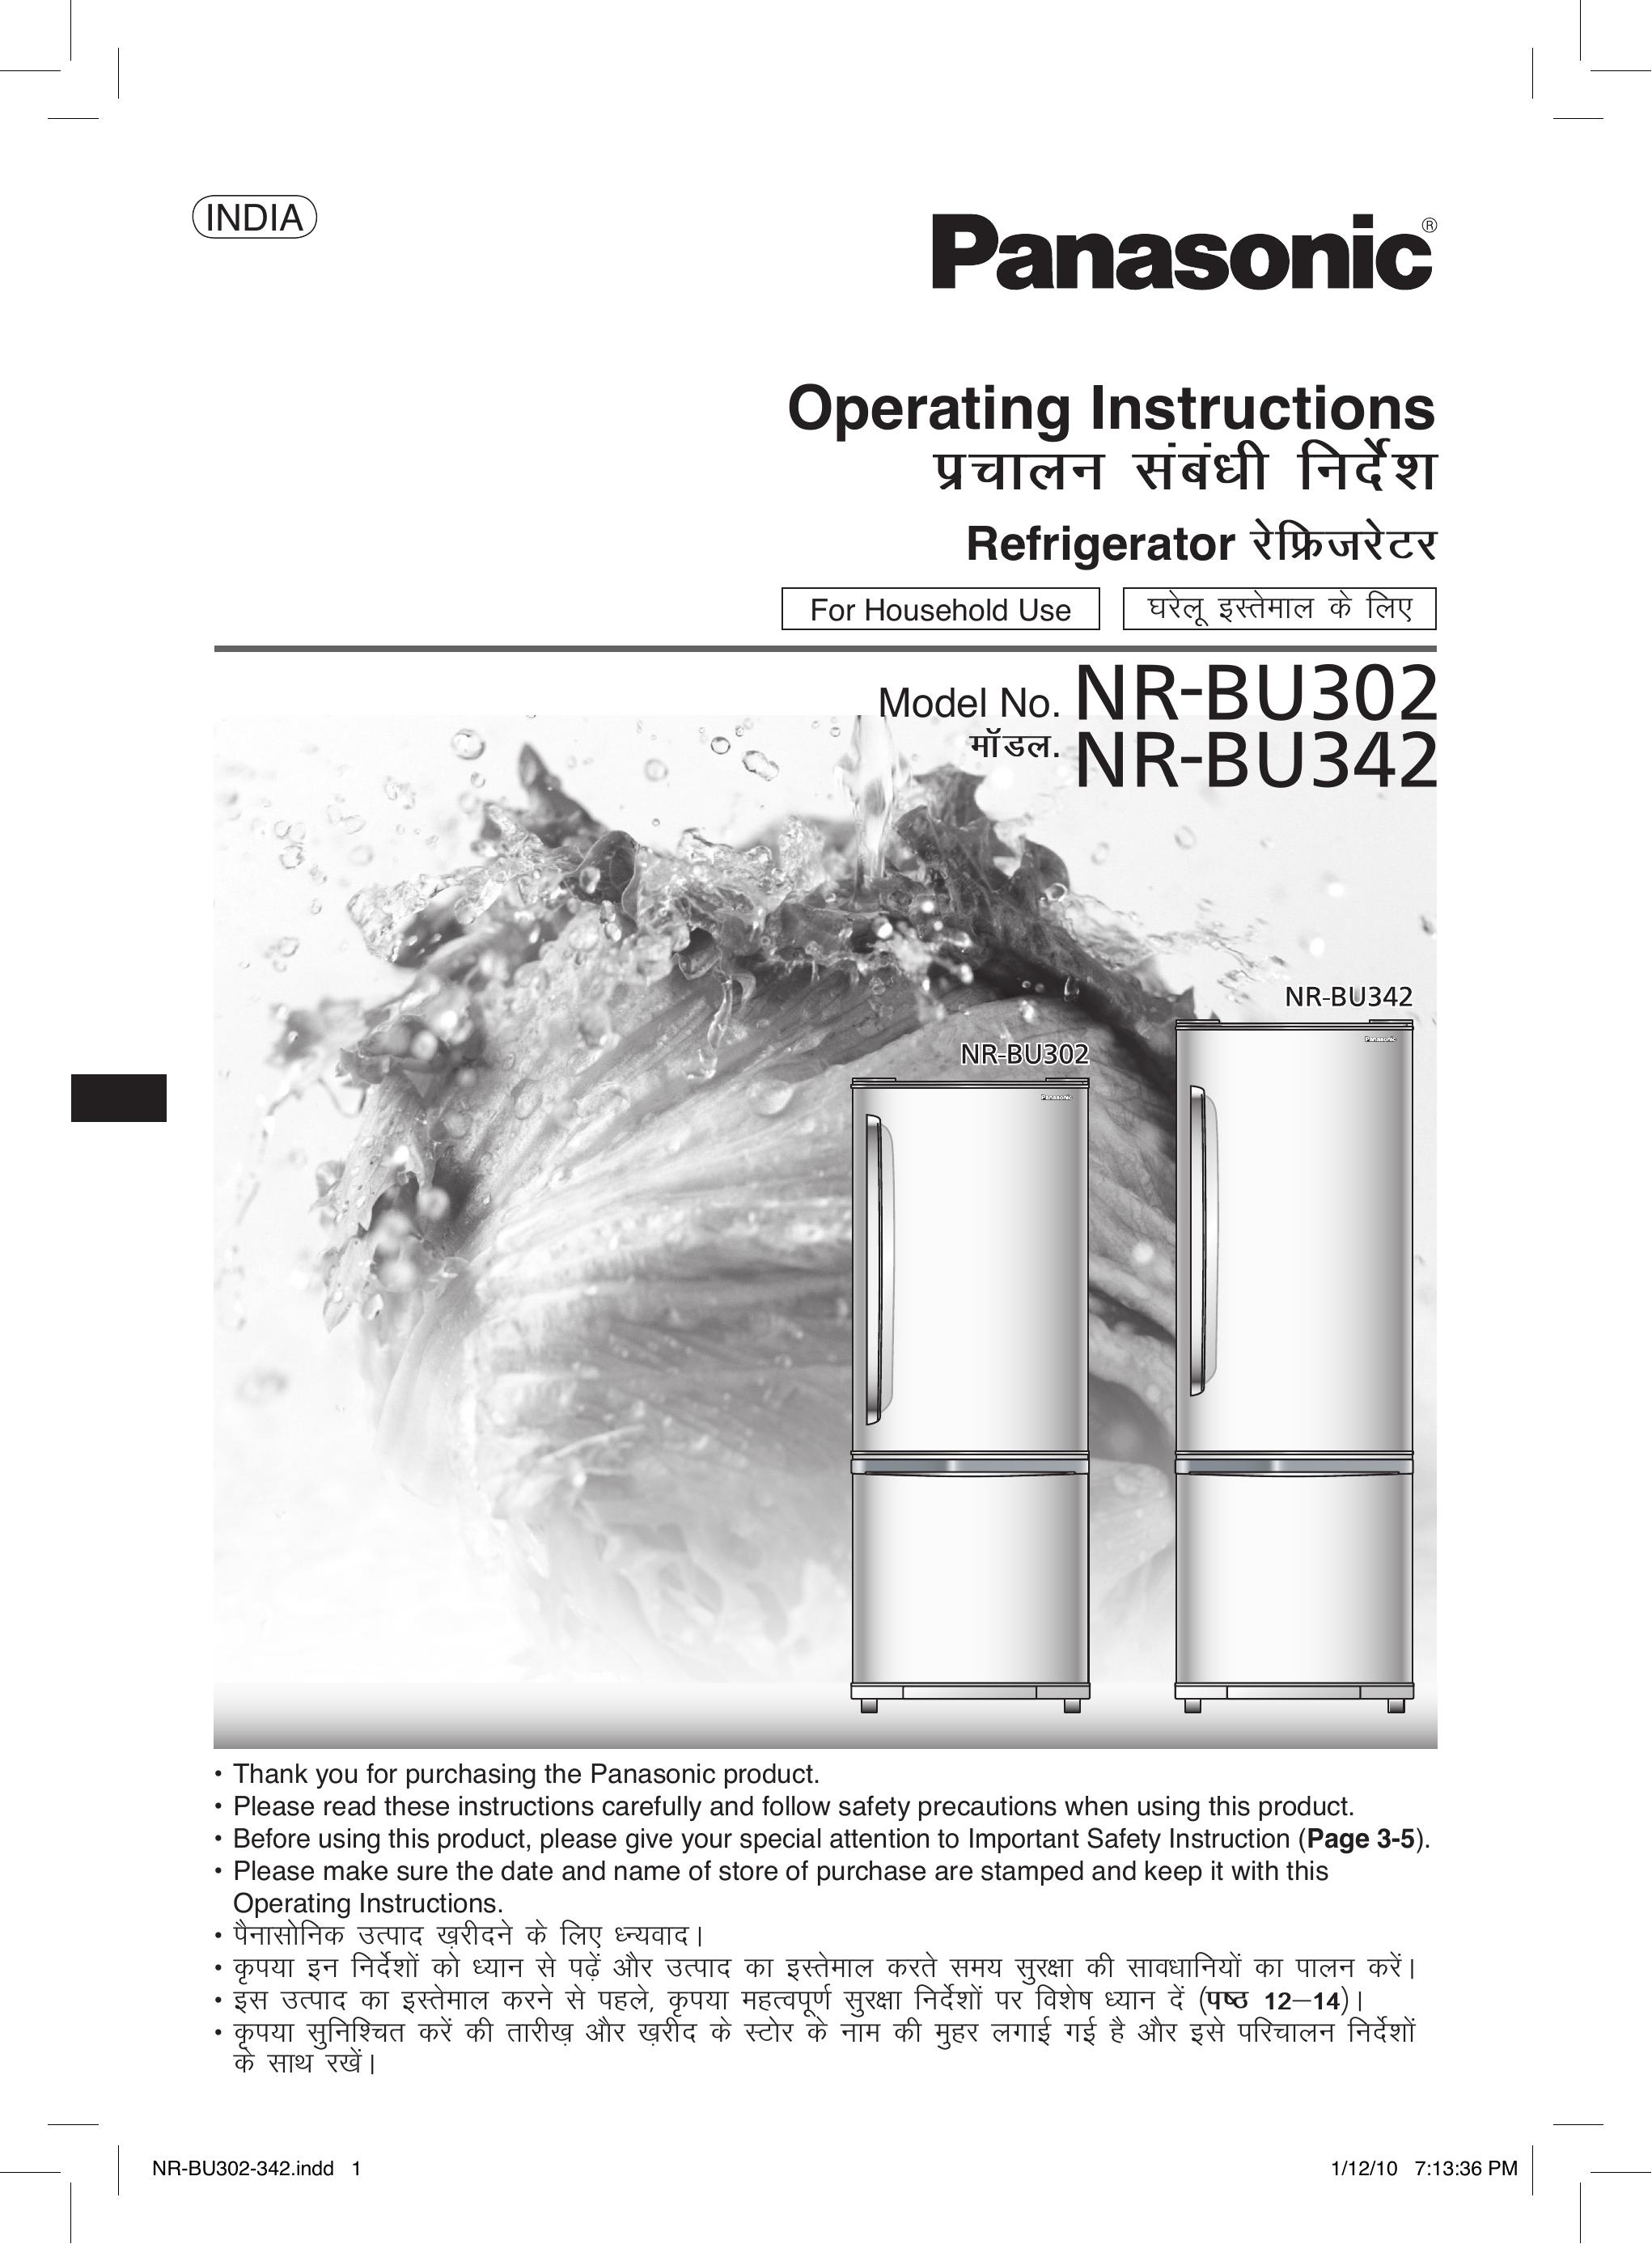 Panasonic NR-BU342 Refrigerator User Manual